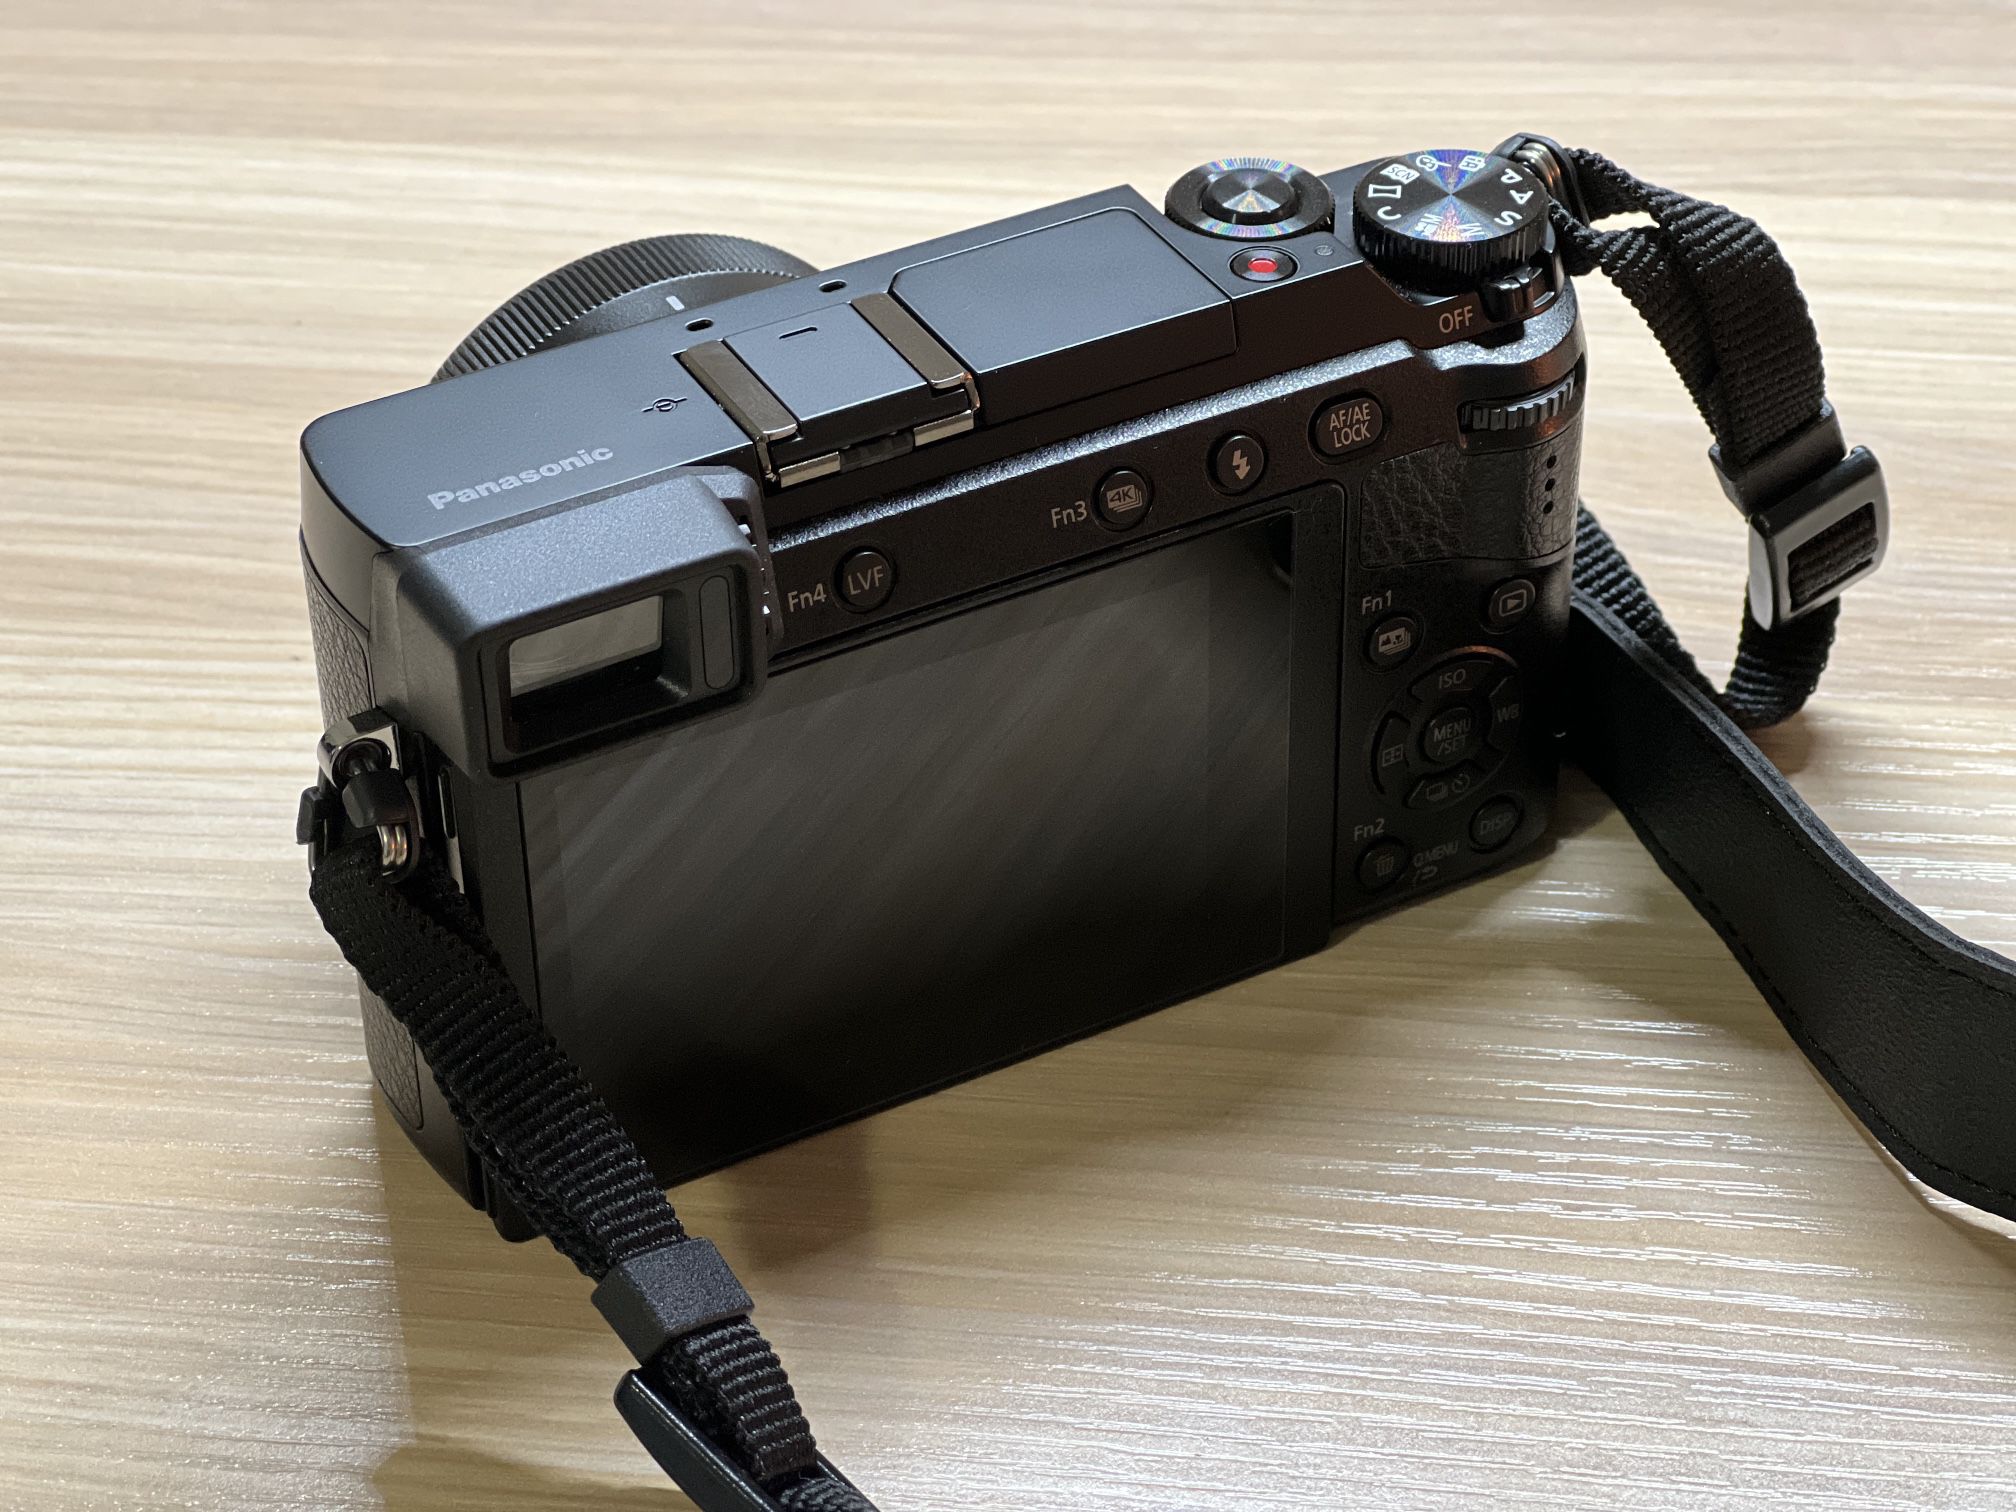 Panasonic LUMIX GX85 4K Mirrorless Camera with 12-32mm & 45-150mm Lenses  -Black DMC-GX85WK 